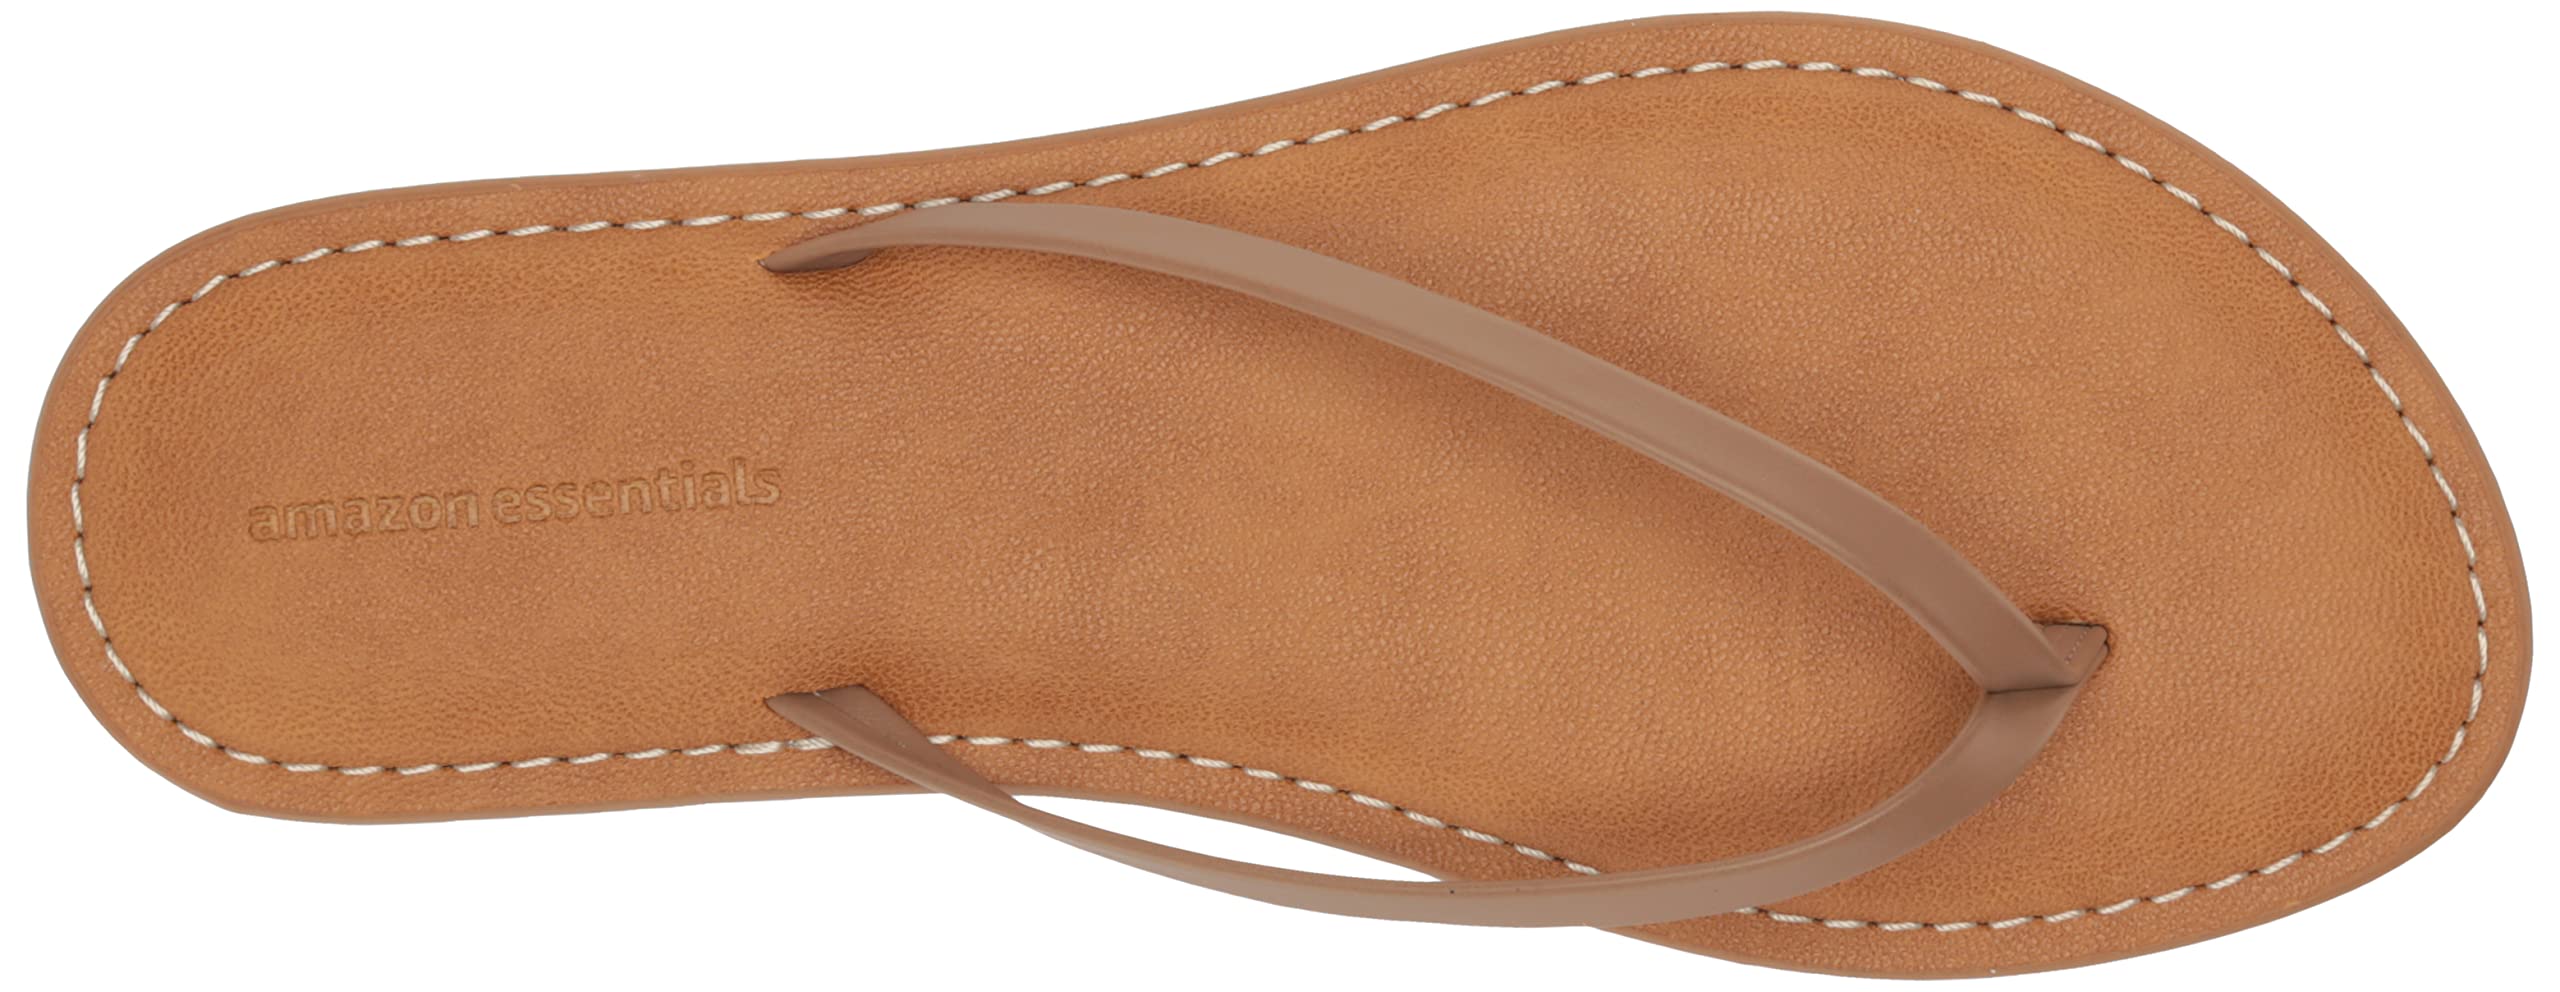 Amazon Essentials Women's Thong Sandal